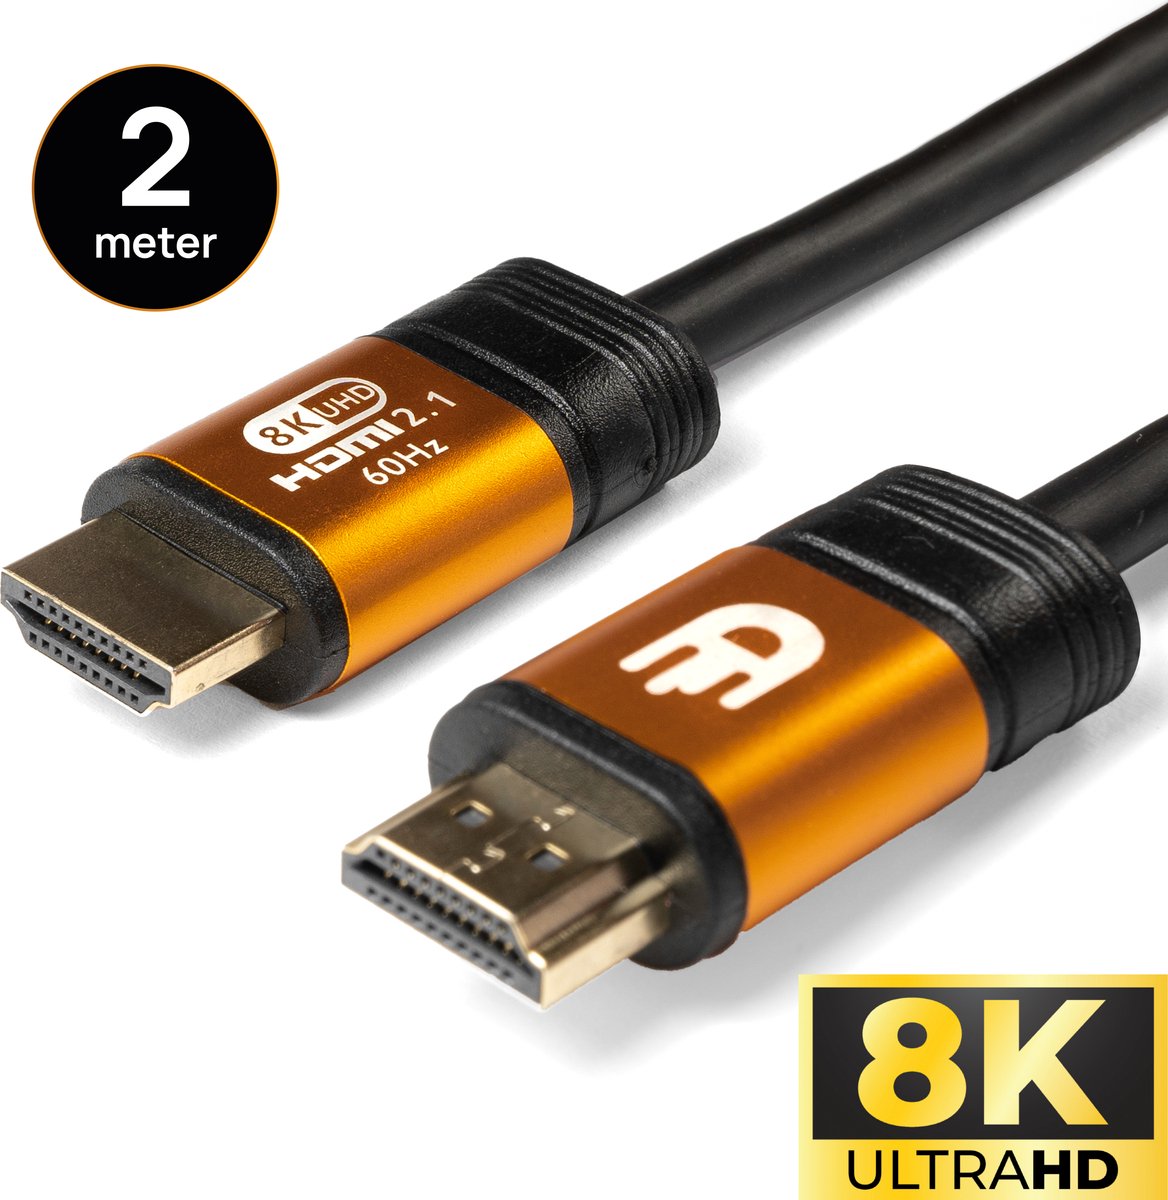 Drivv. Premium HDMI Kabel 2.1 - Ultra HD 8K - 4K 120hz - Xbox Series X & PS5 - 2 meter - Oranje - Drivv.